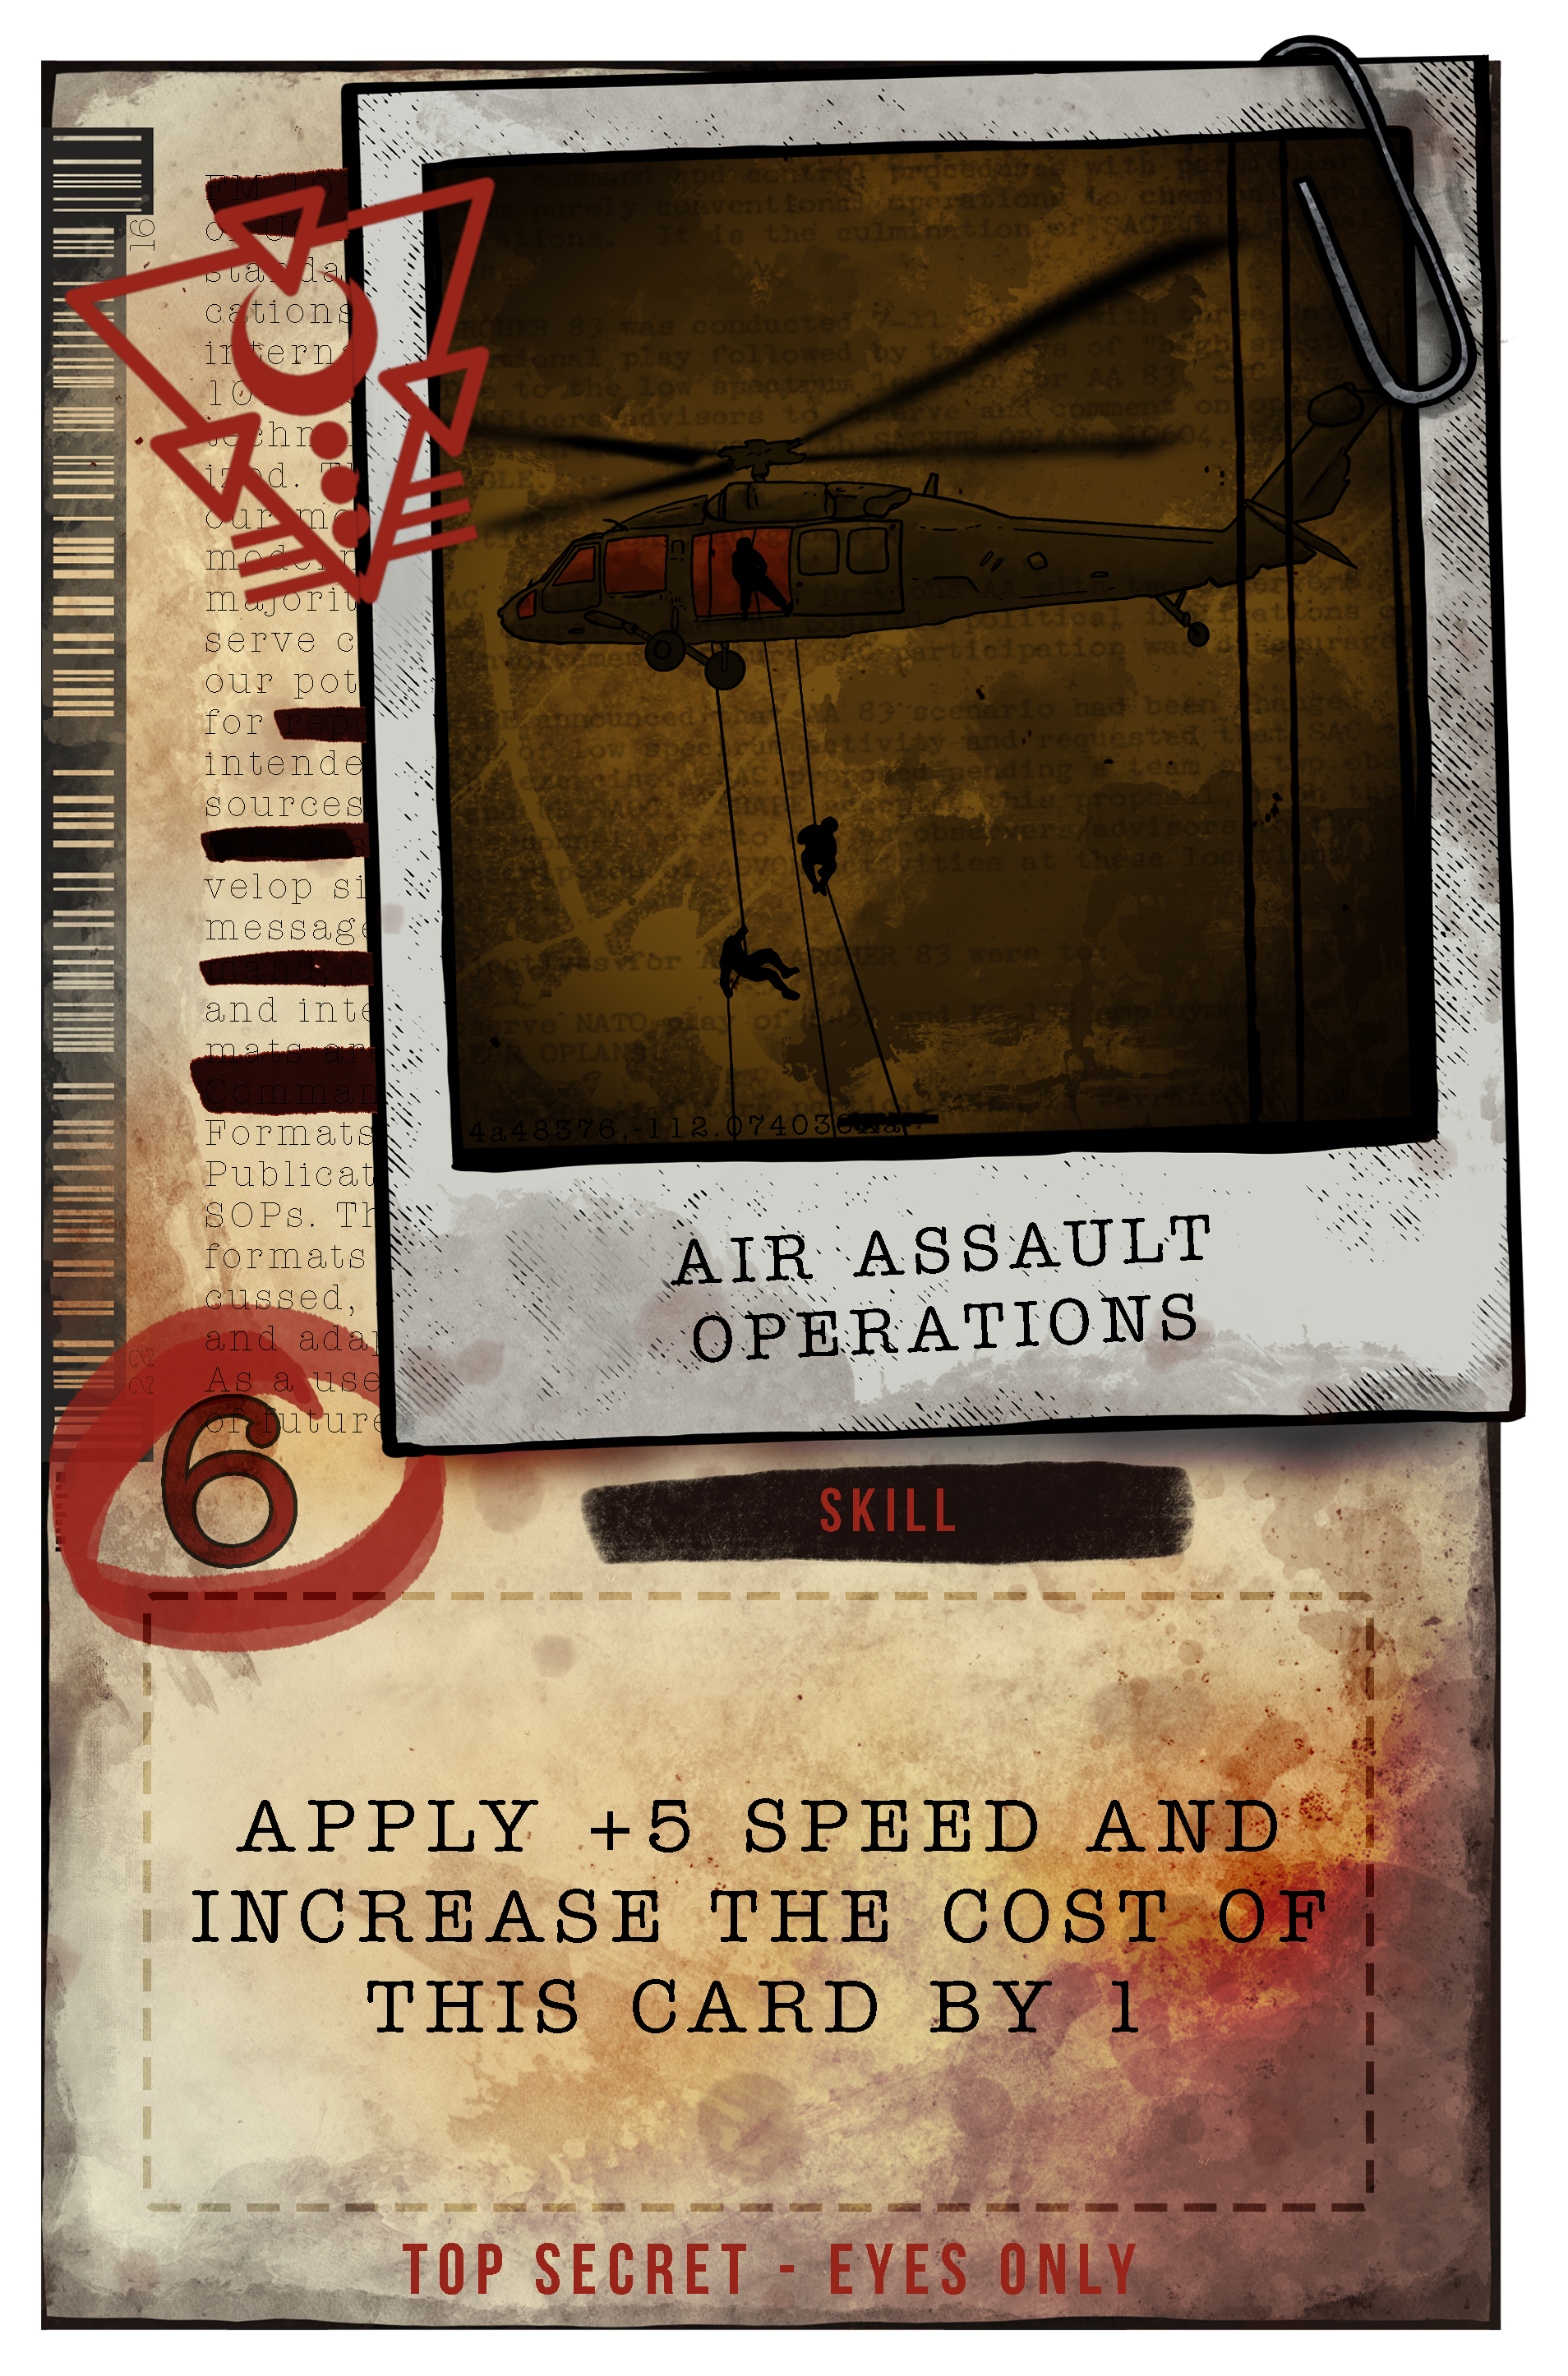 PSC_Operator_Card_Air Assault Operations_FullCard.png